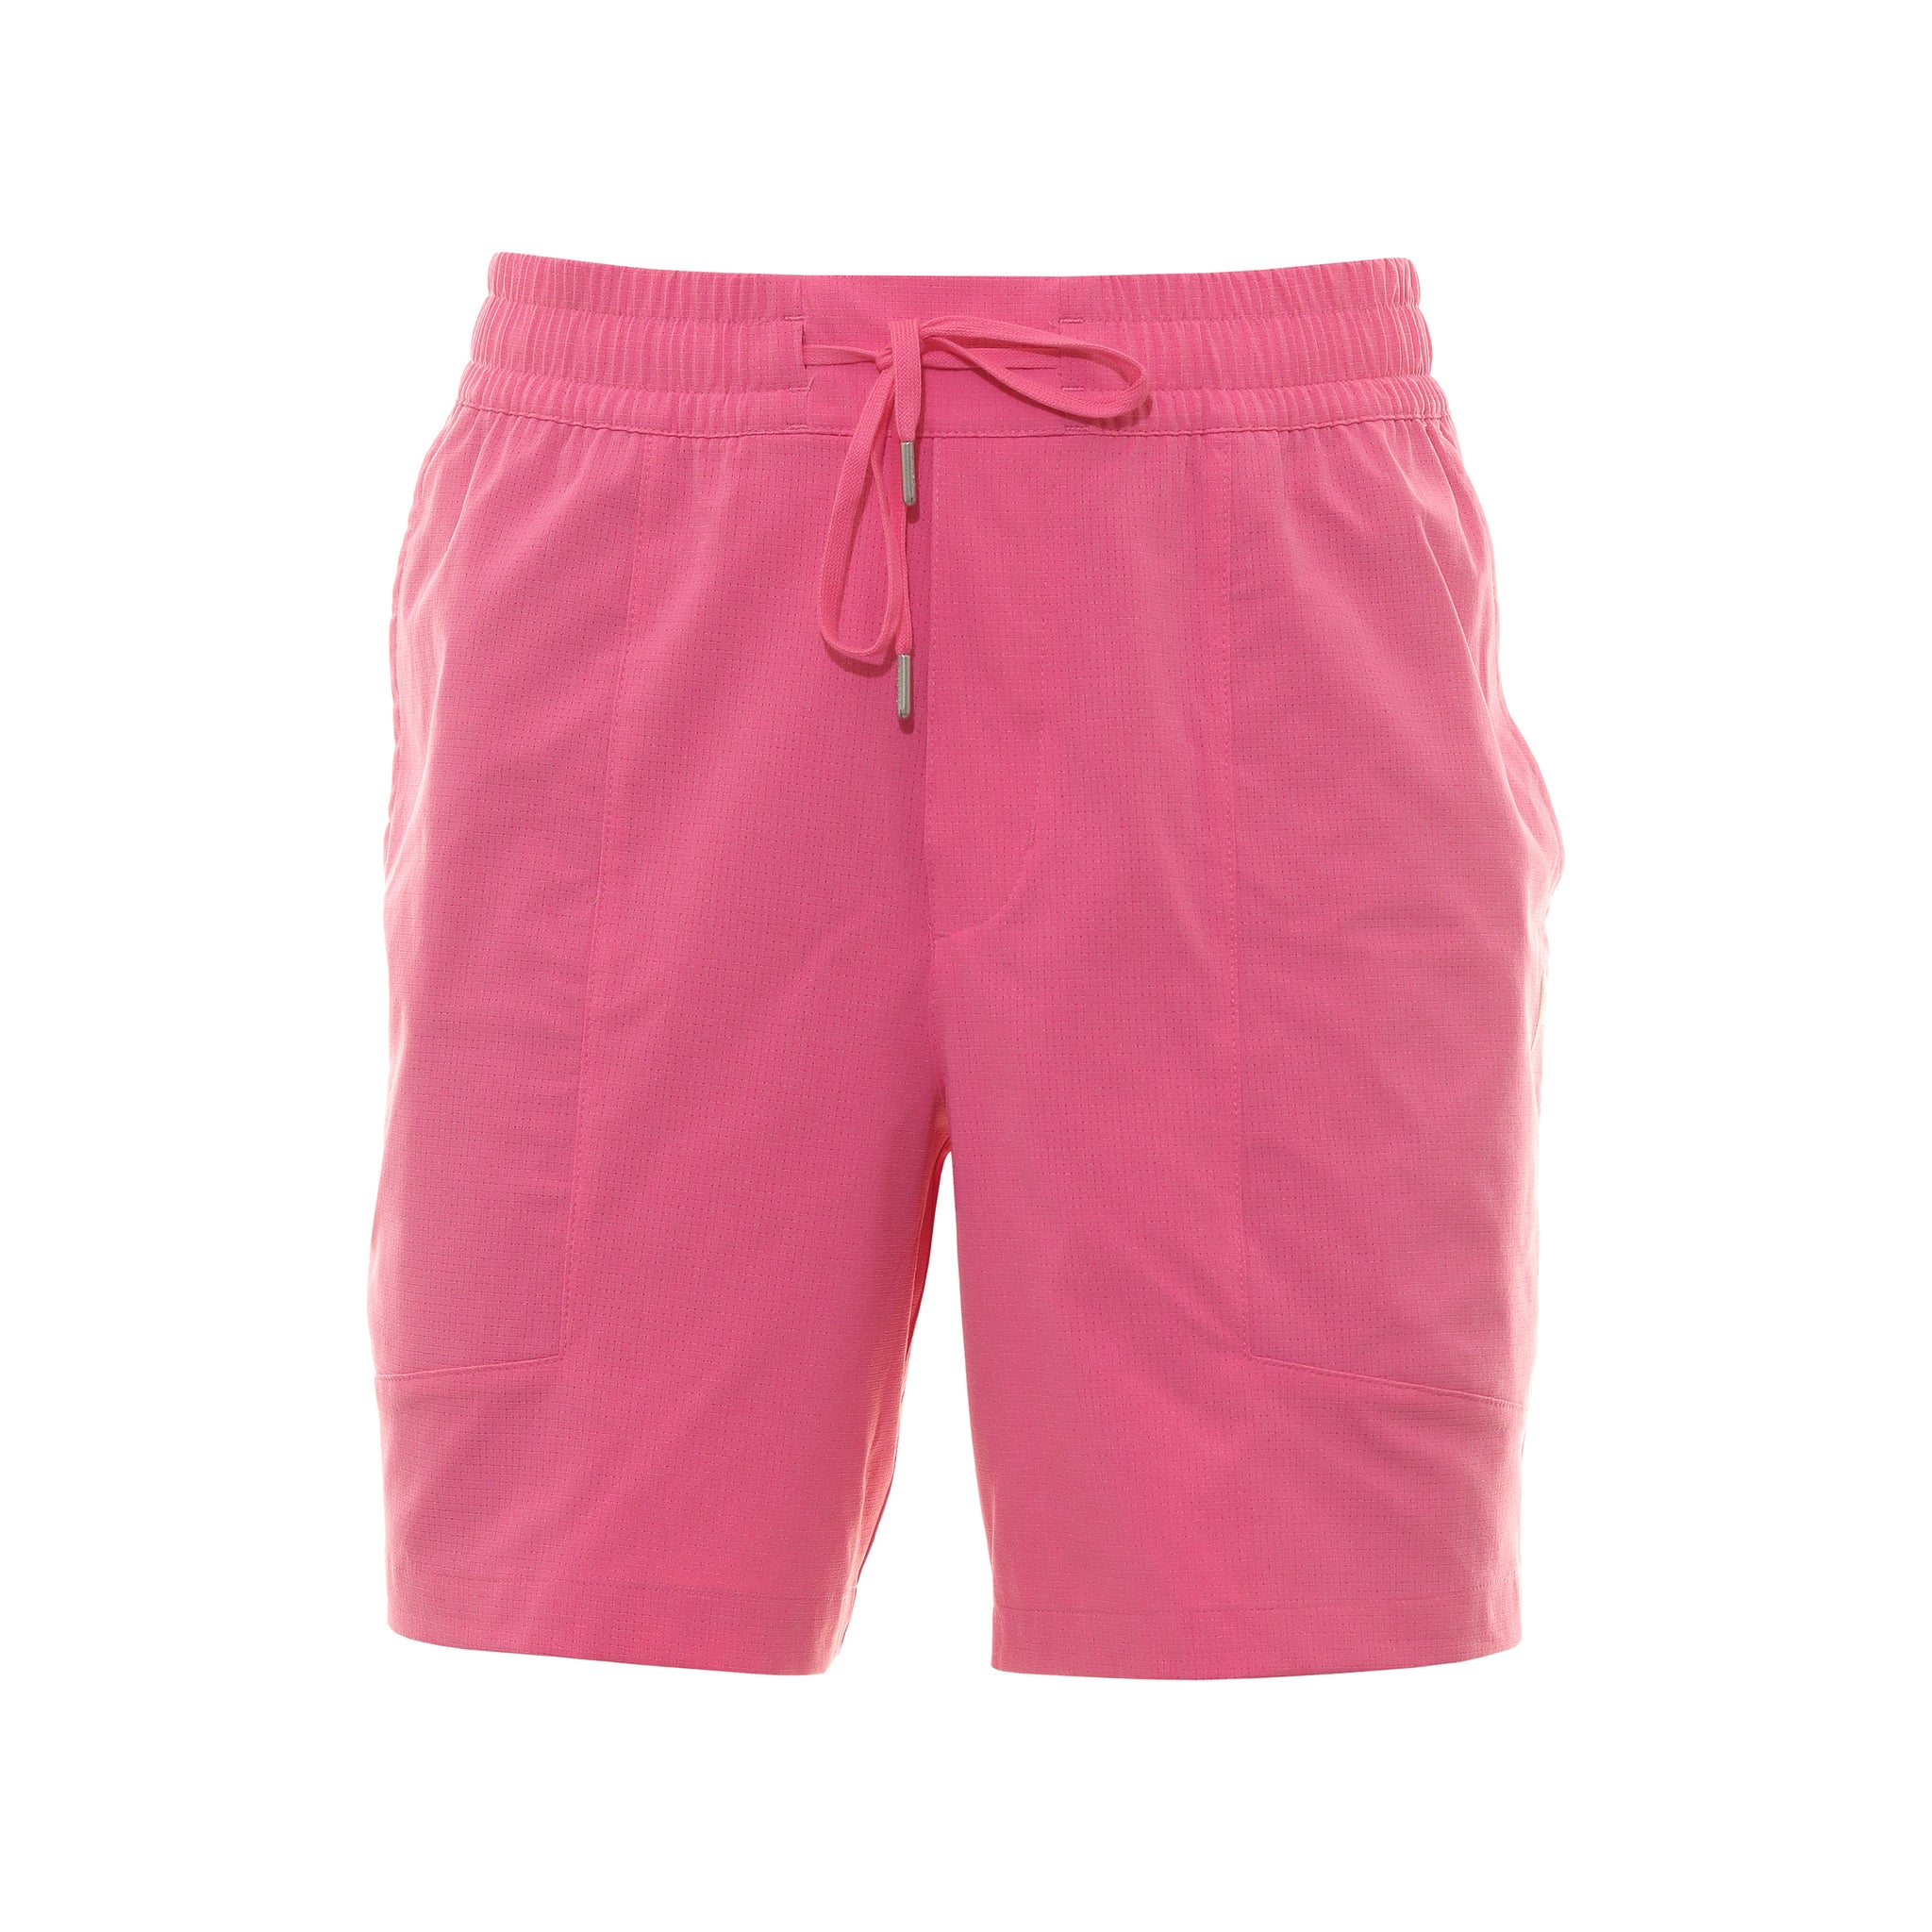 Puma Golf x PTC Vented Shorts 539203 Charming Pink 04 & Function18 ...